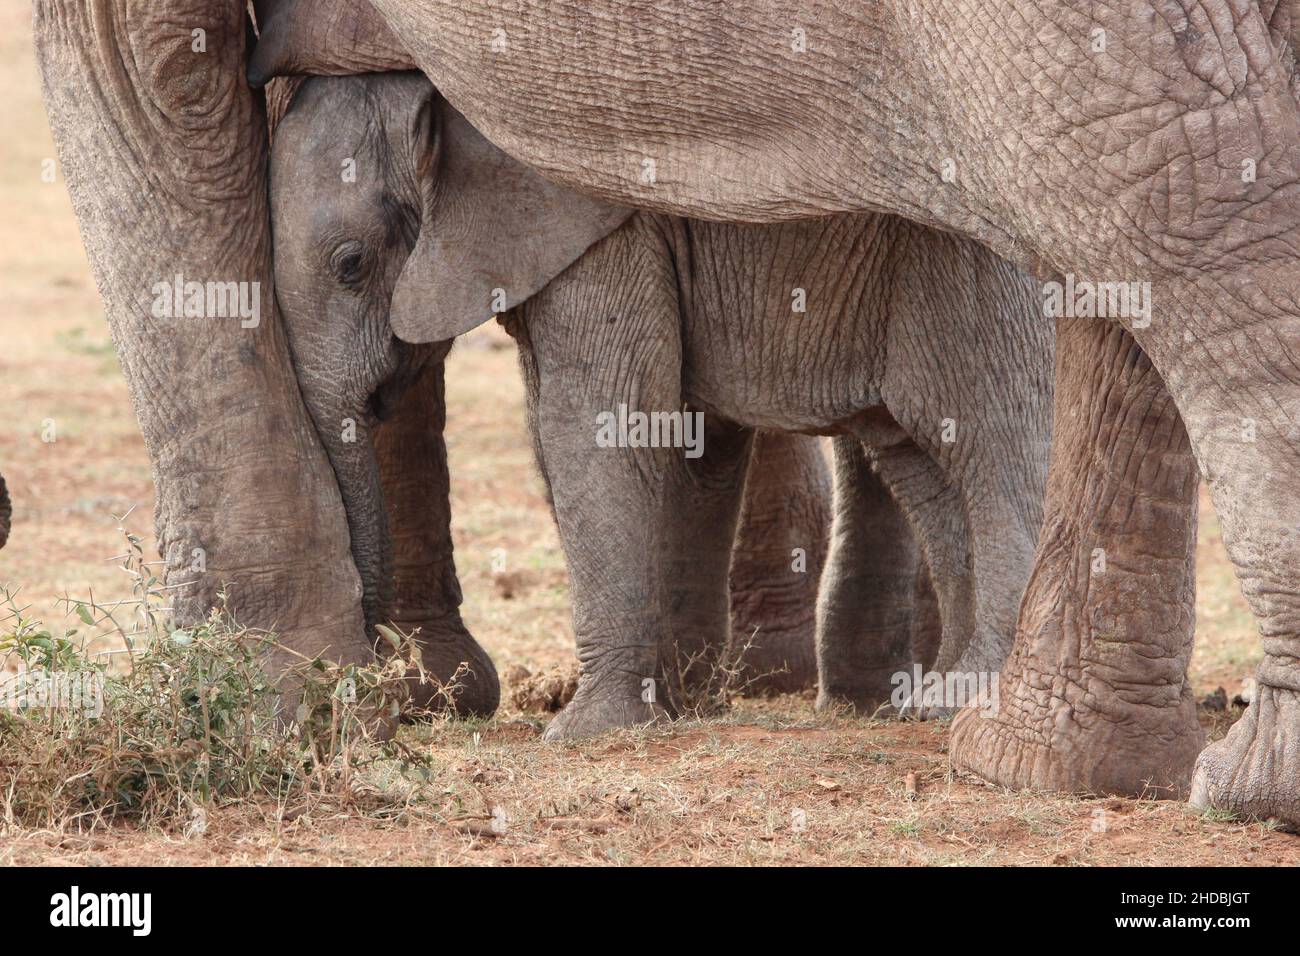 African elephant, Addo Elephant National Park, South Africa Stock Photo